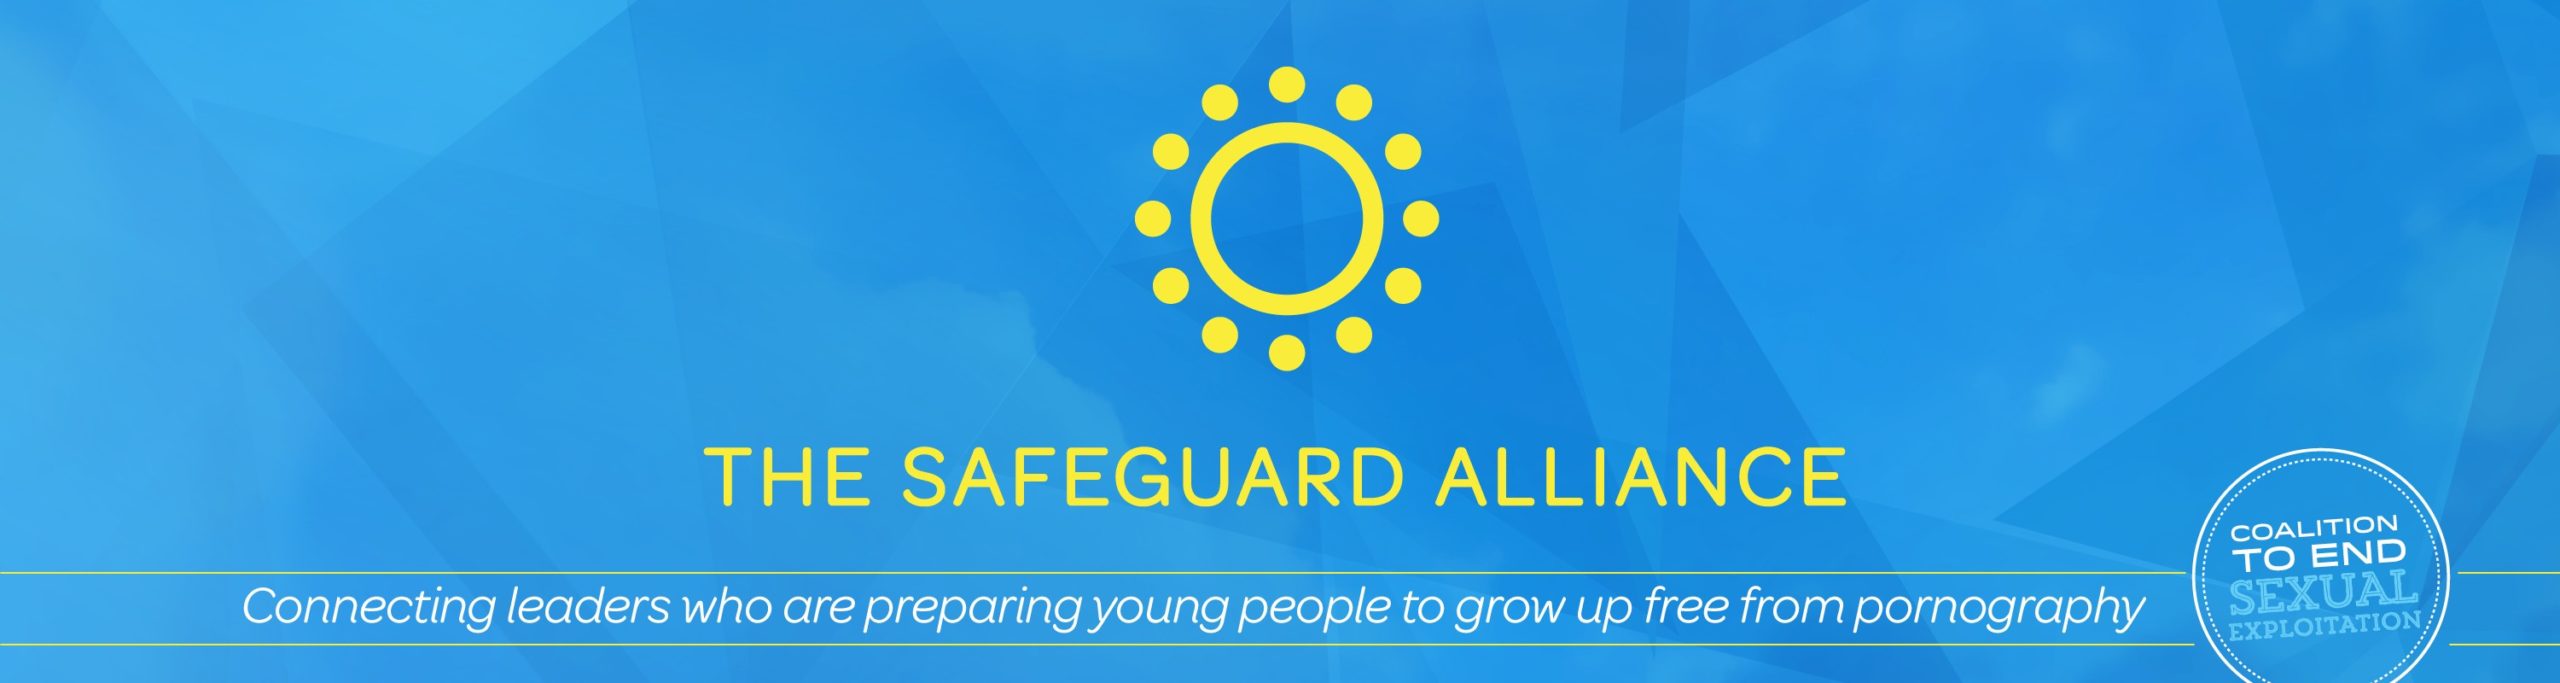 Safeguard Alliance header image